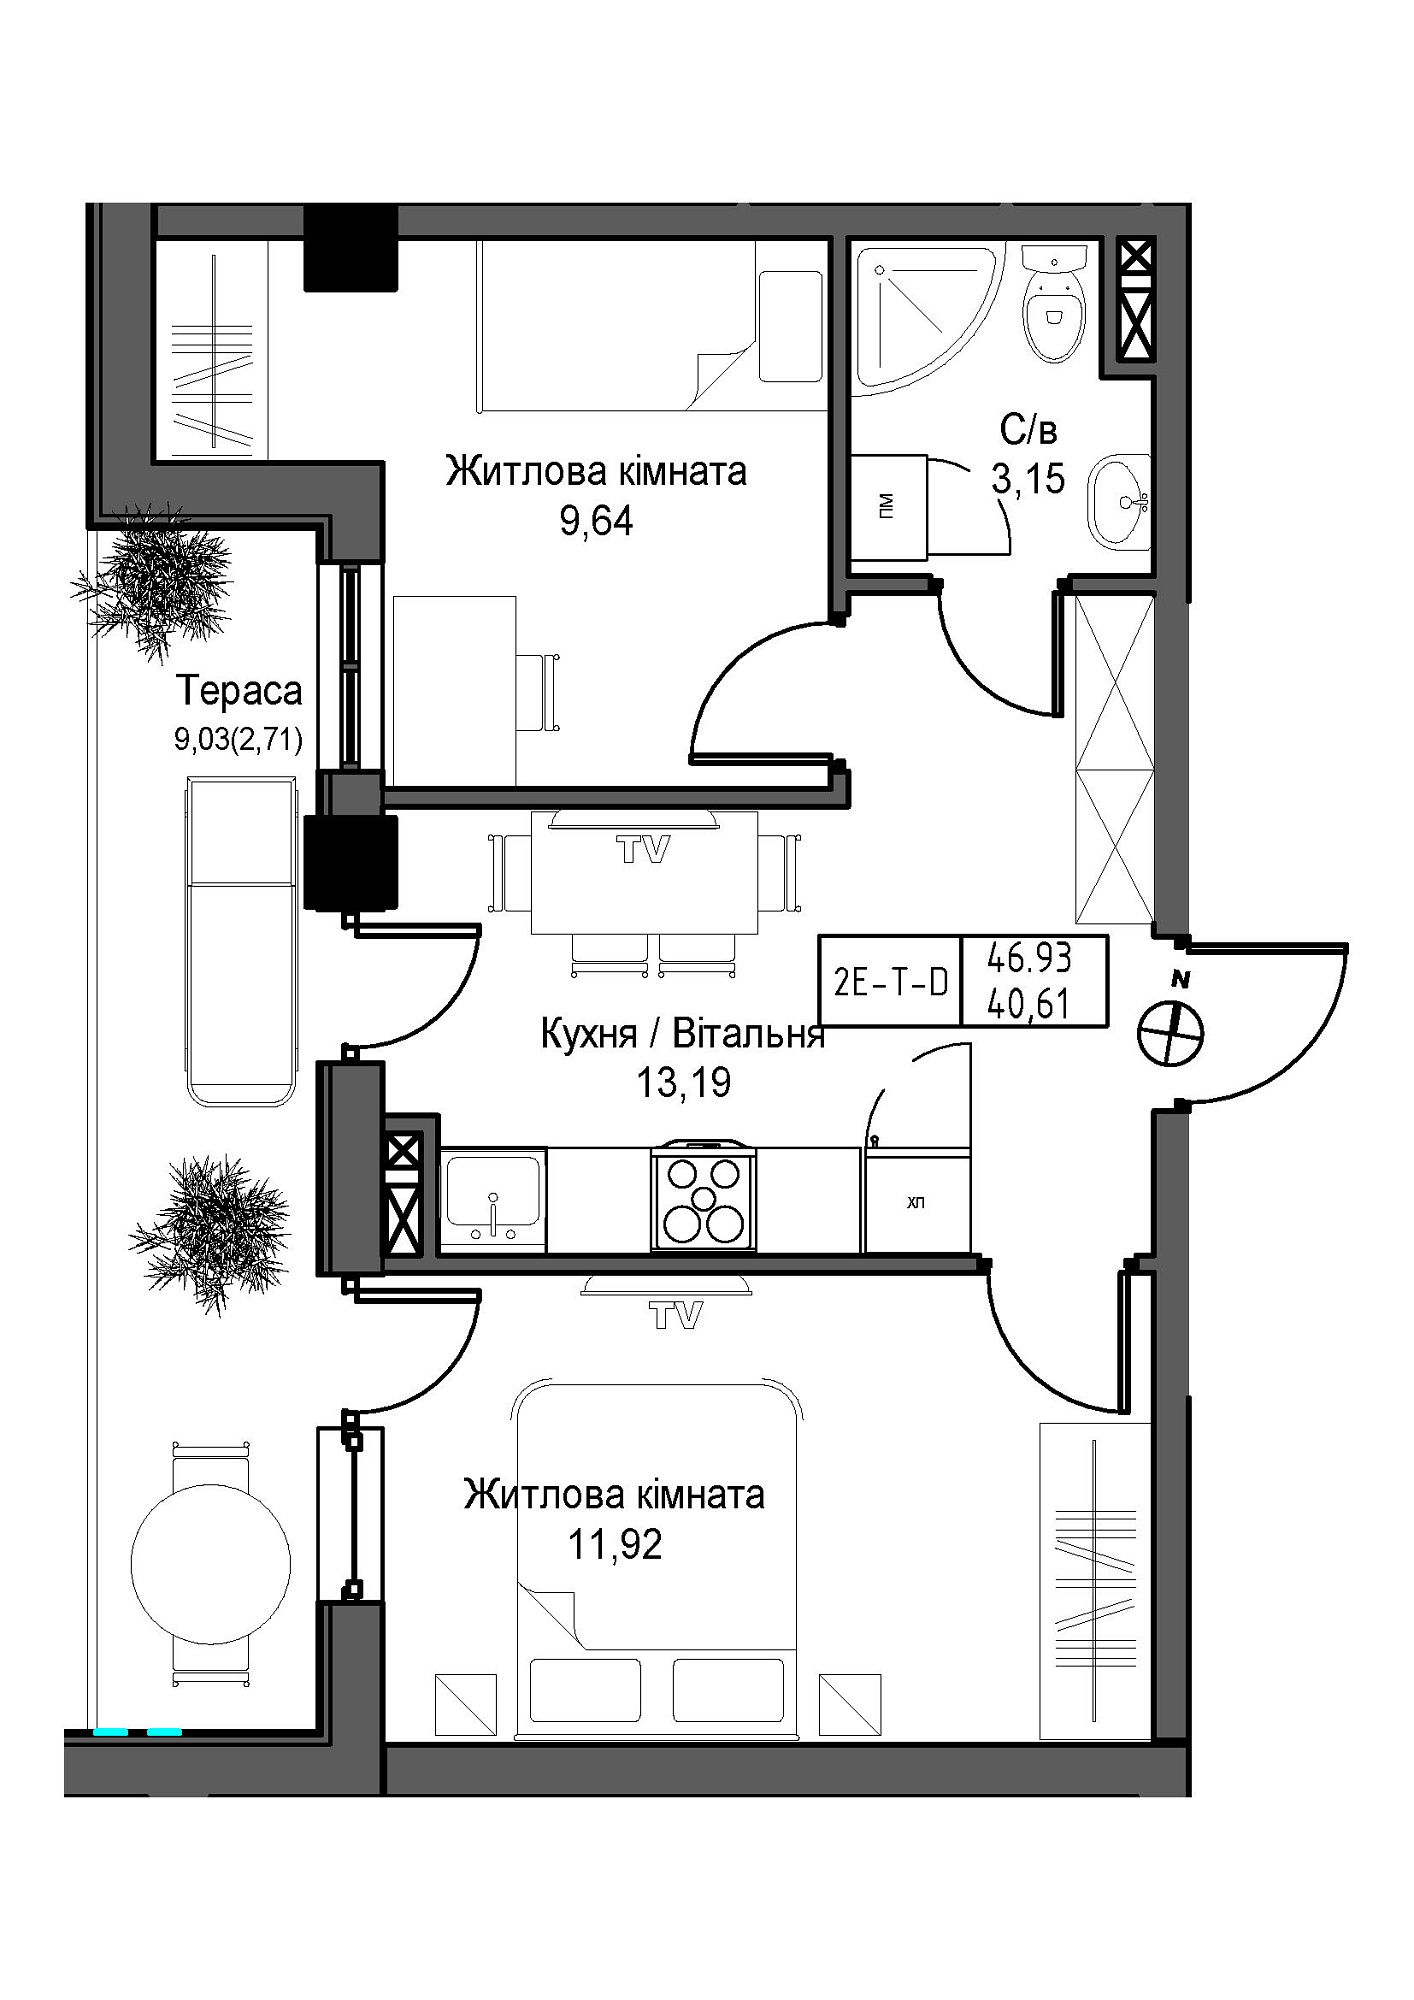 Планування 2-к квартира площею 40.61м2, UM-007-06/0001.